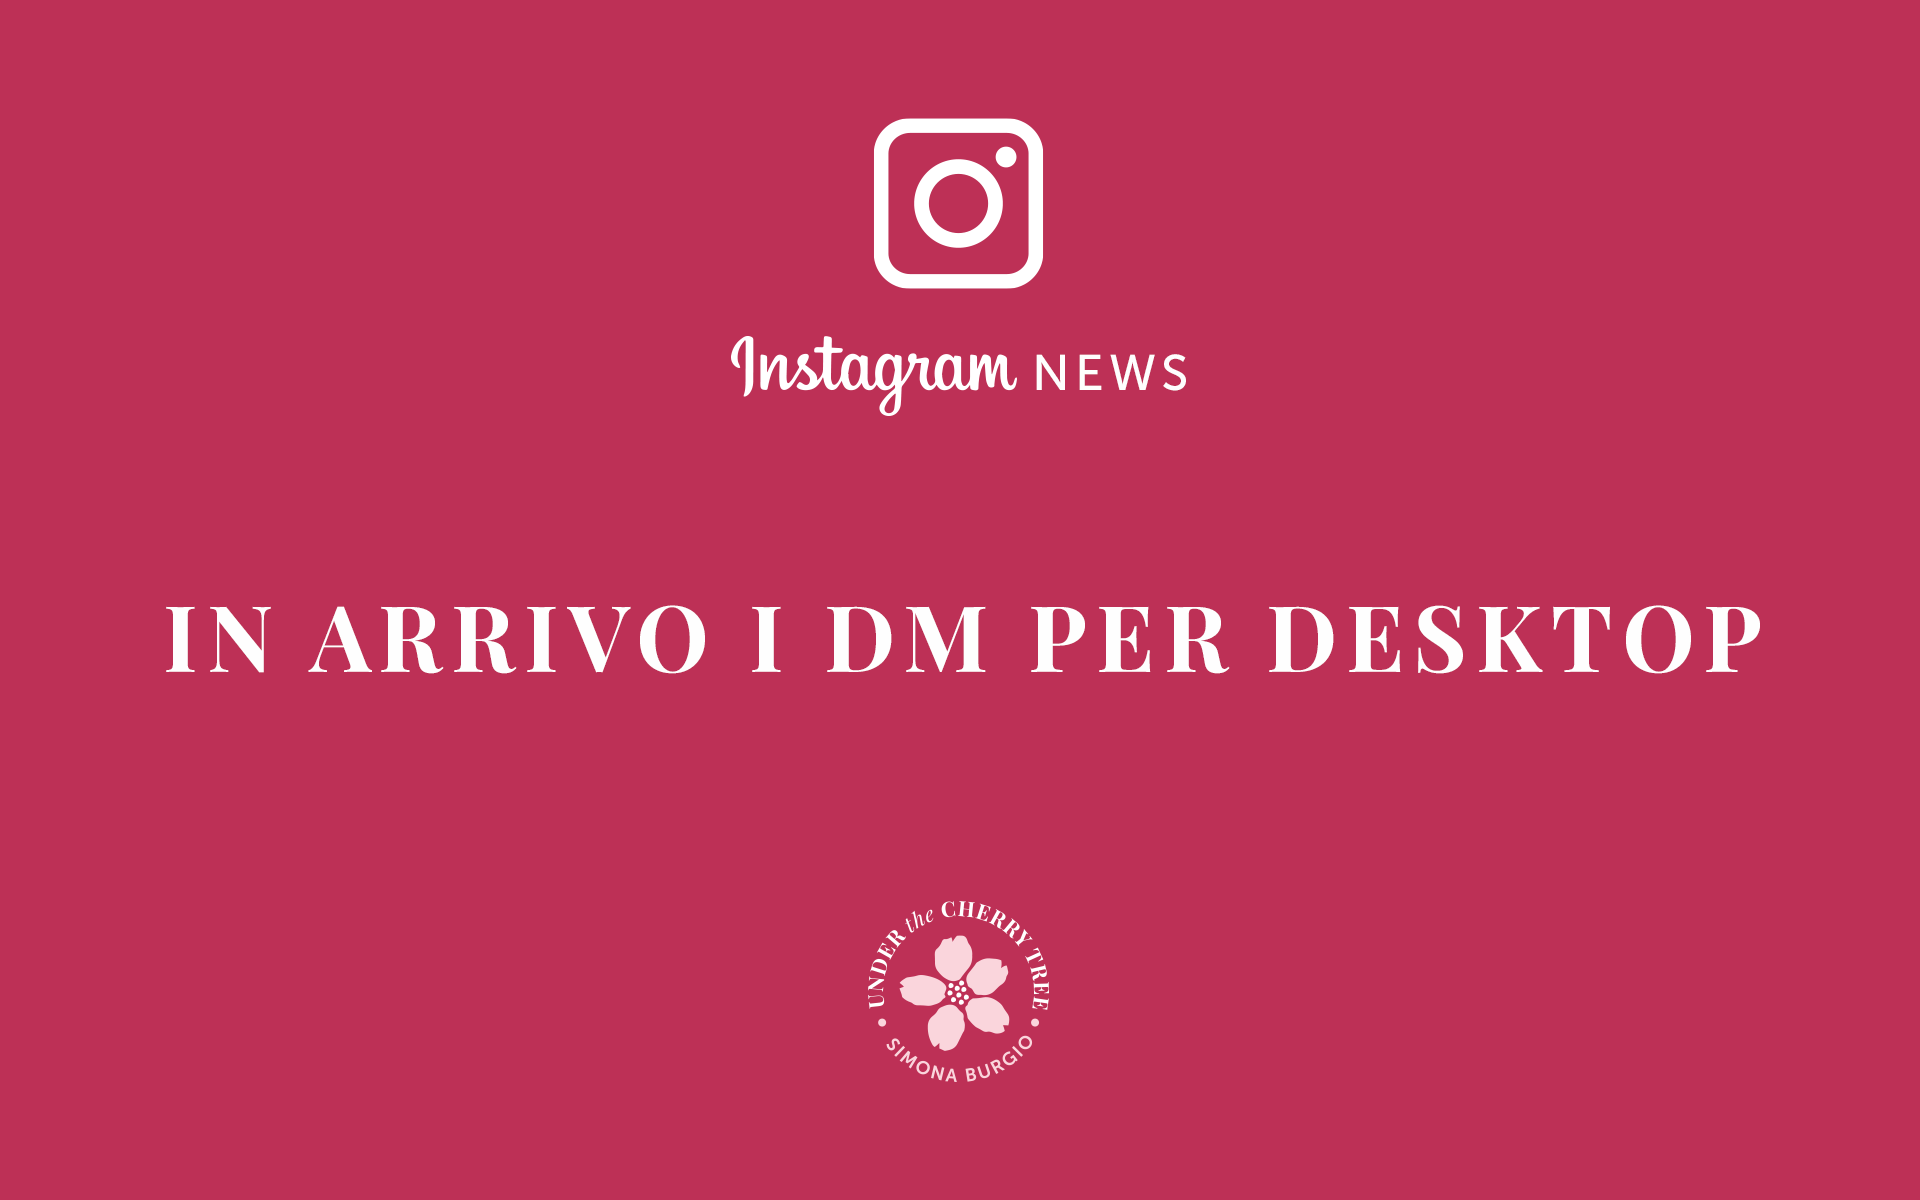 Instagram: arrivano i DM per desktop